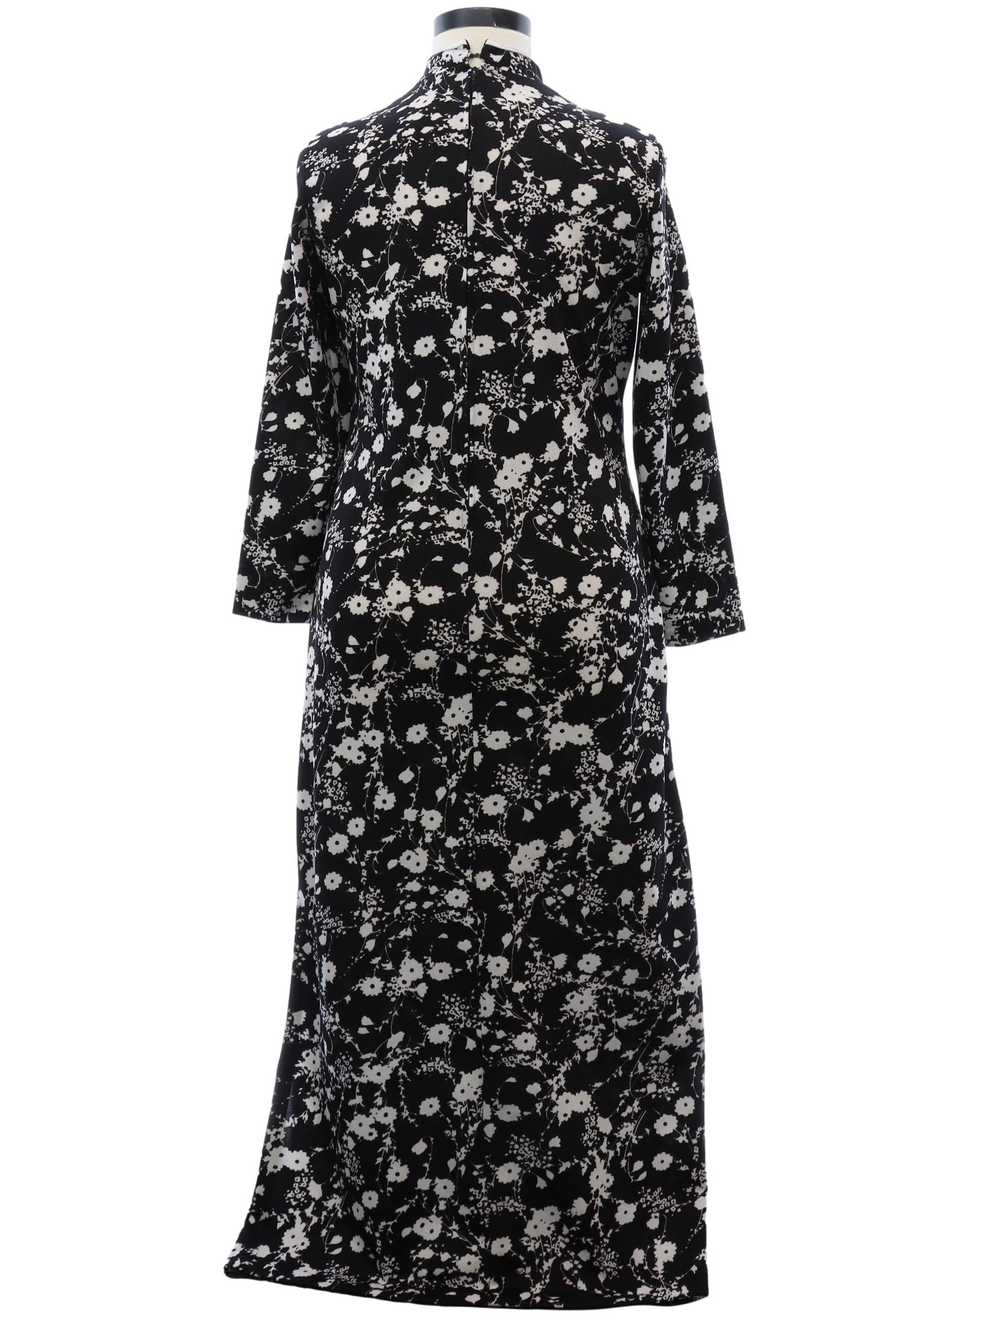 1960's Lady Blair Mod Knit Dress - image 3